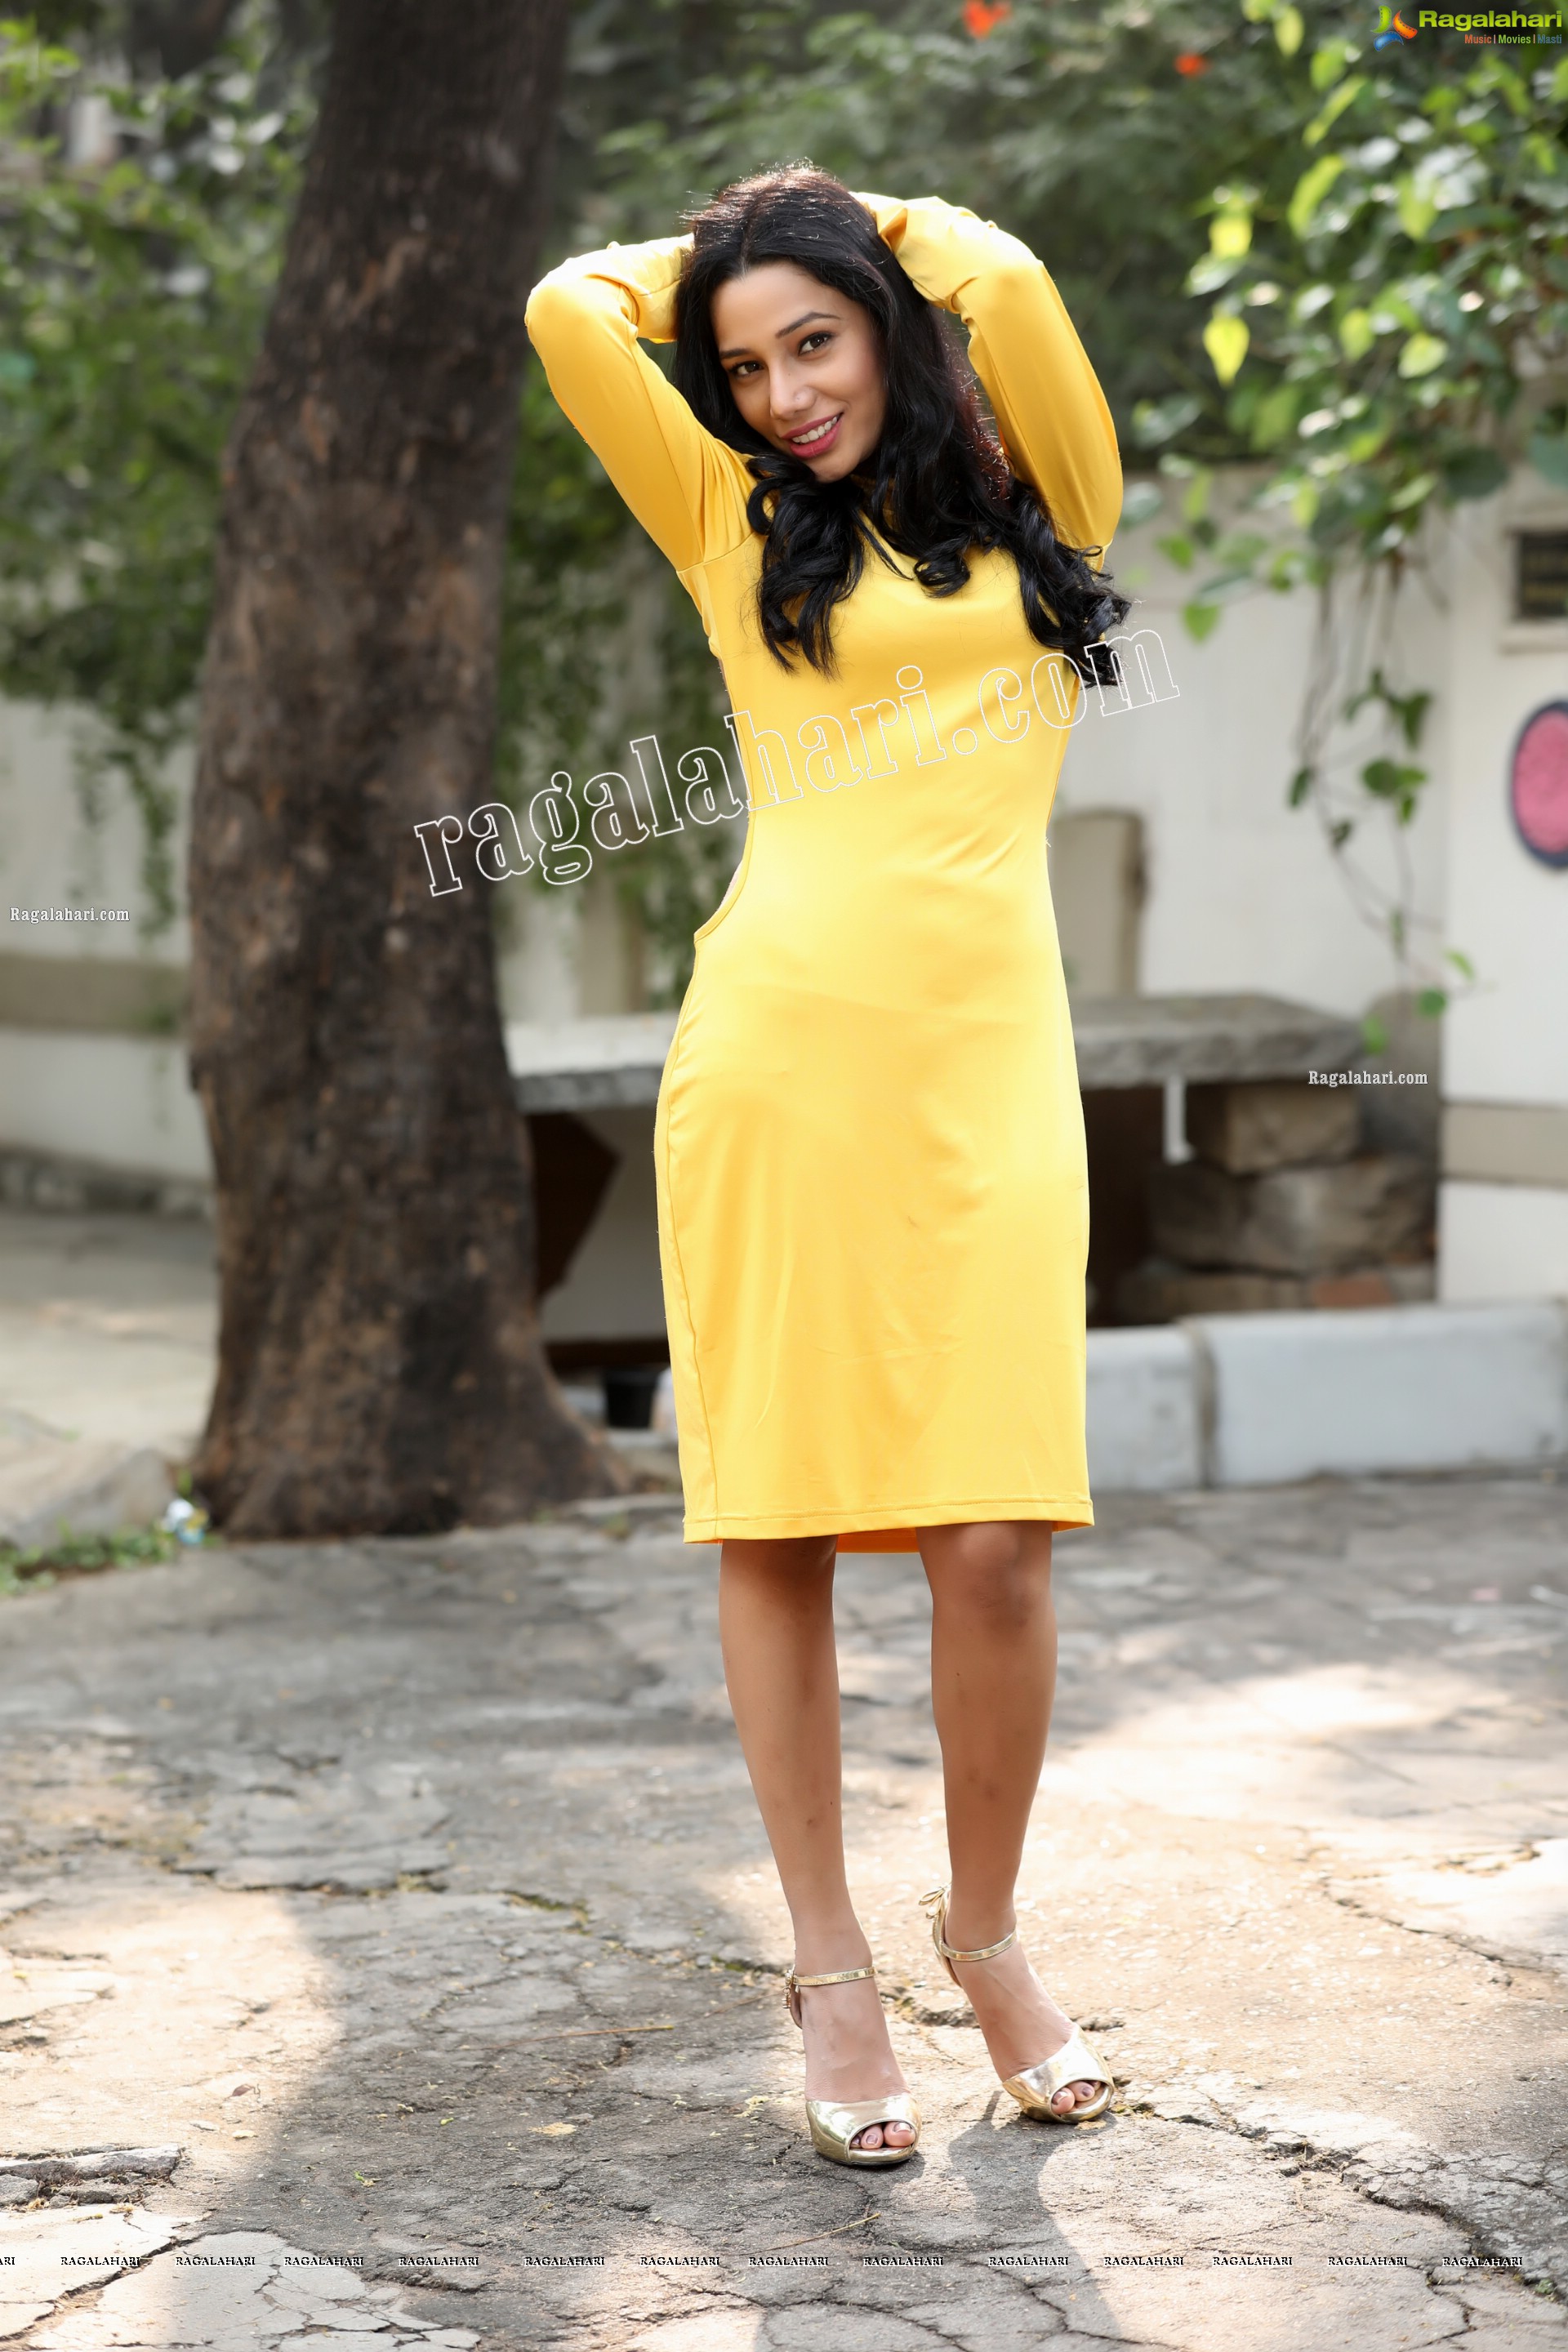 Tueeshaa in Yellow High Neck Jumper Dress Exclusive Photo Shoot